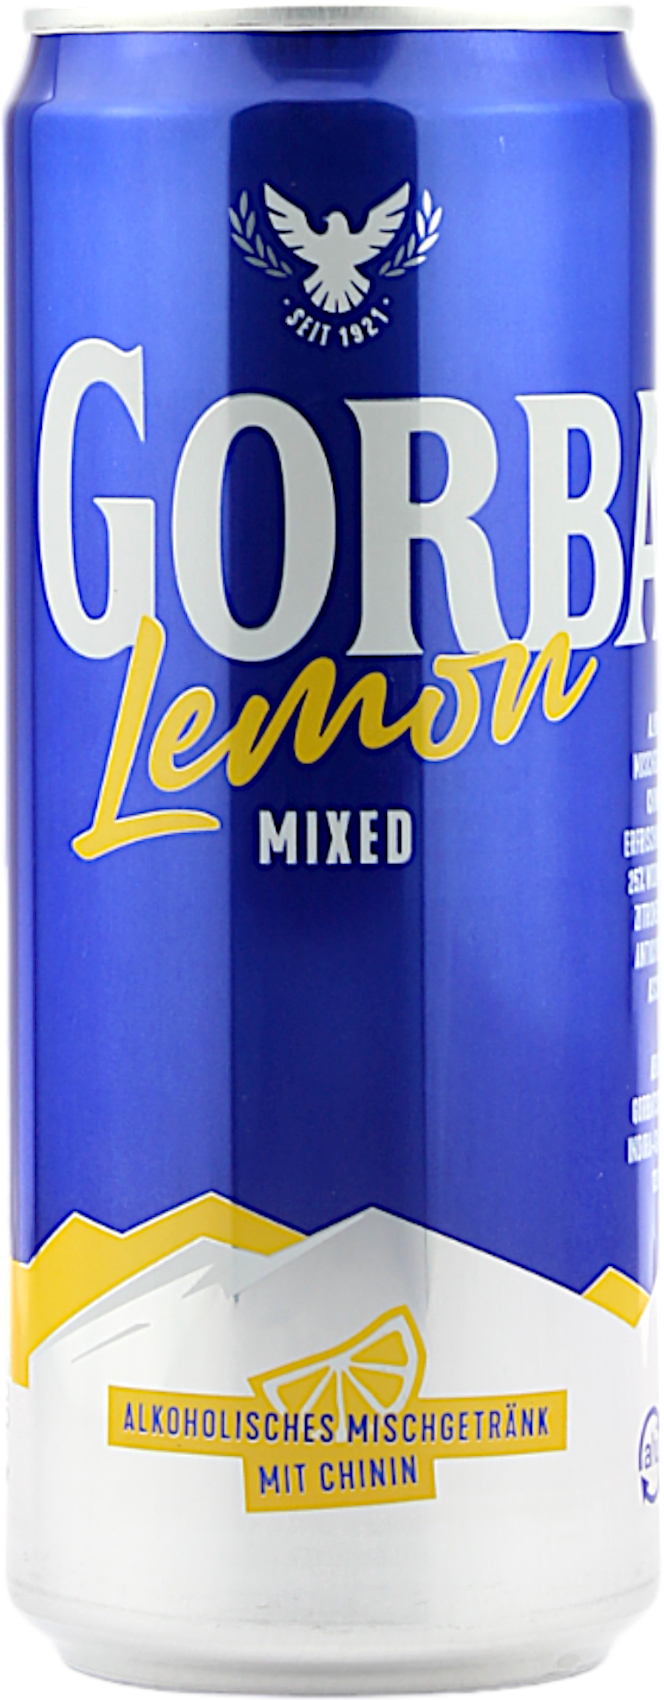 Wodka Gorbatschow Lemon 10.0% 330ml